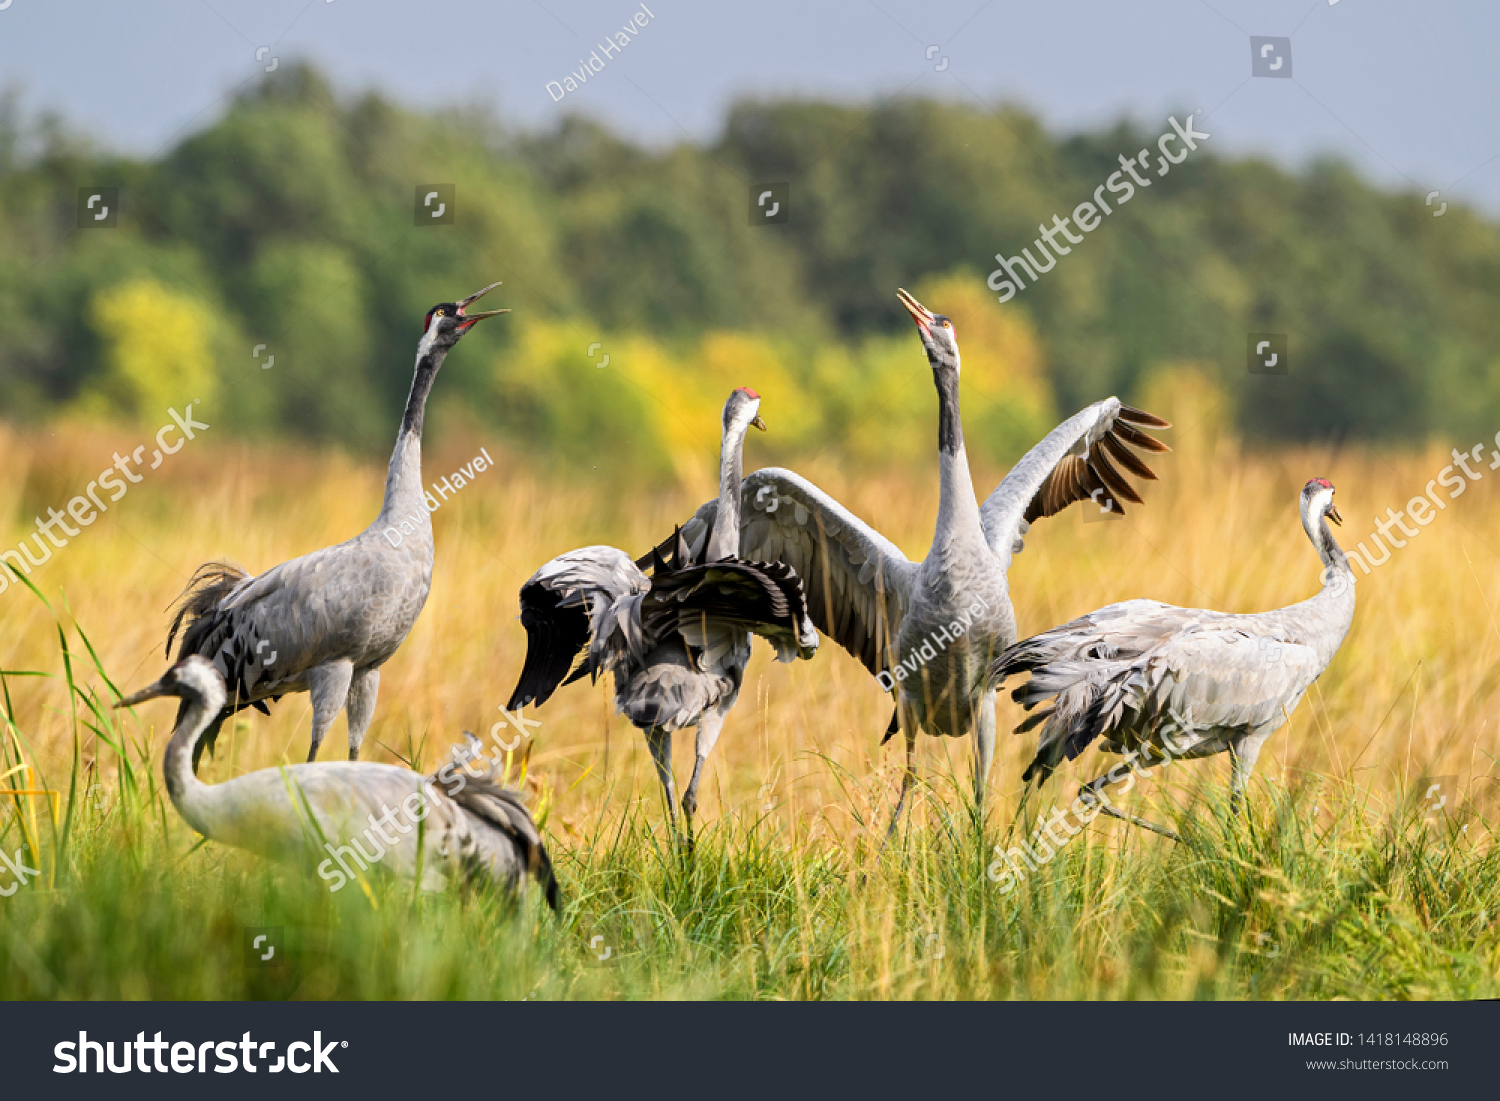 Common Crane - Grus grus, beautiful large bird from Euroasian fields and meadows, Hortobagy National Park, Hungary. #1418148896